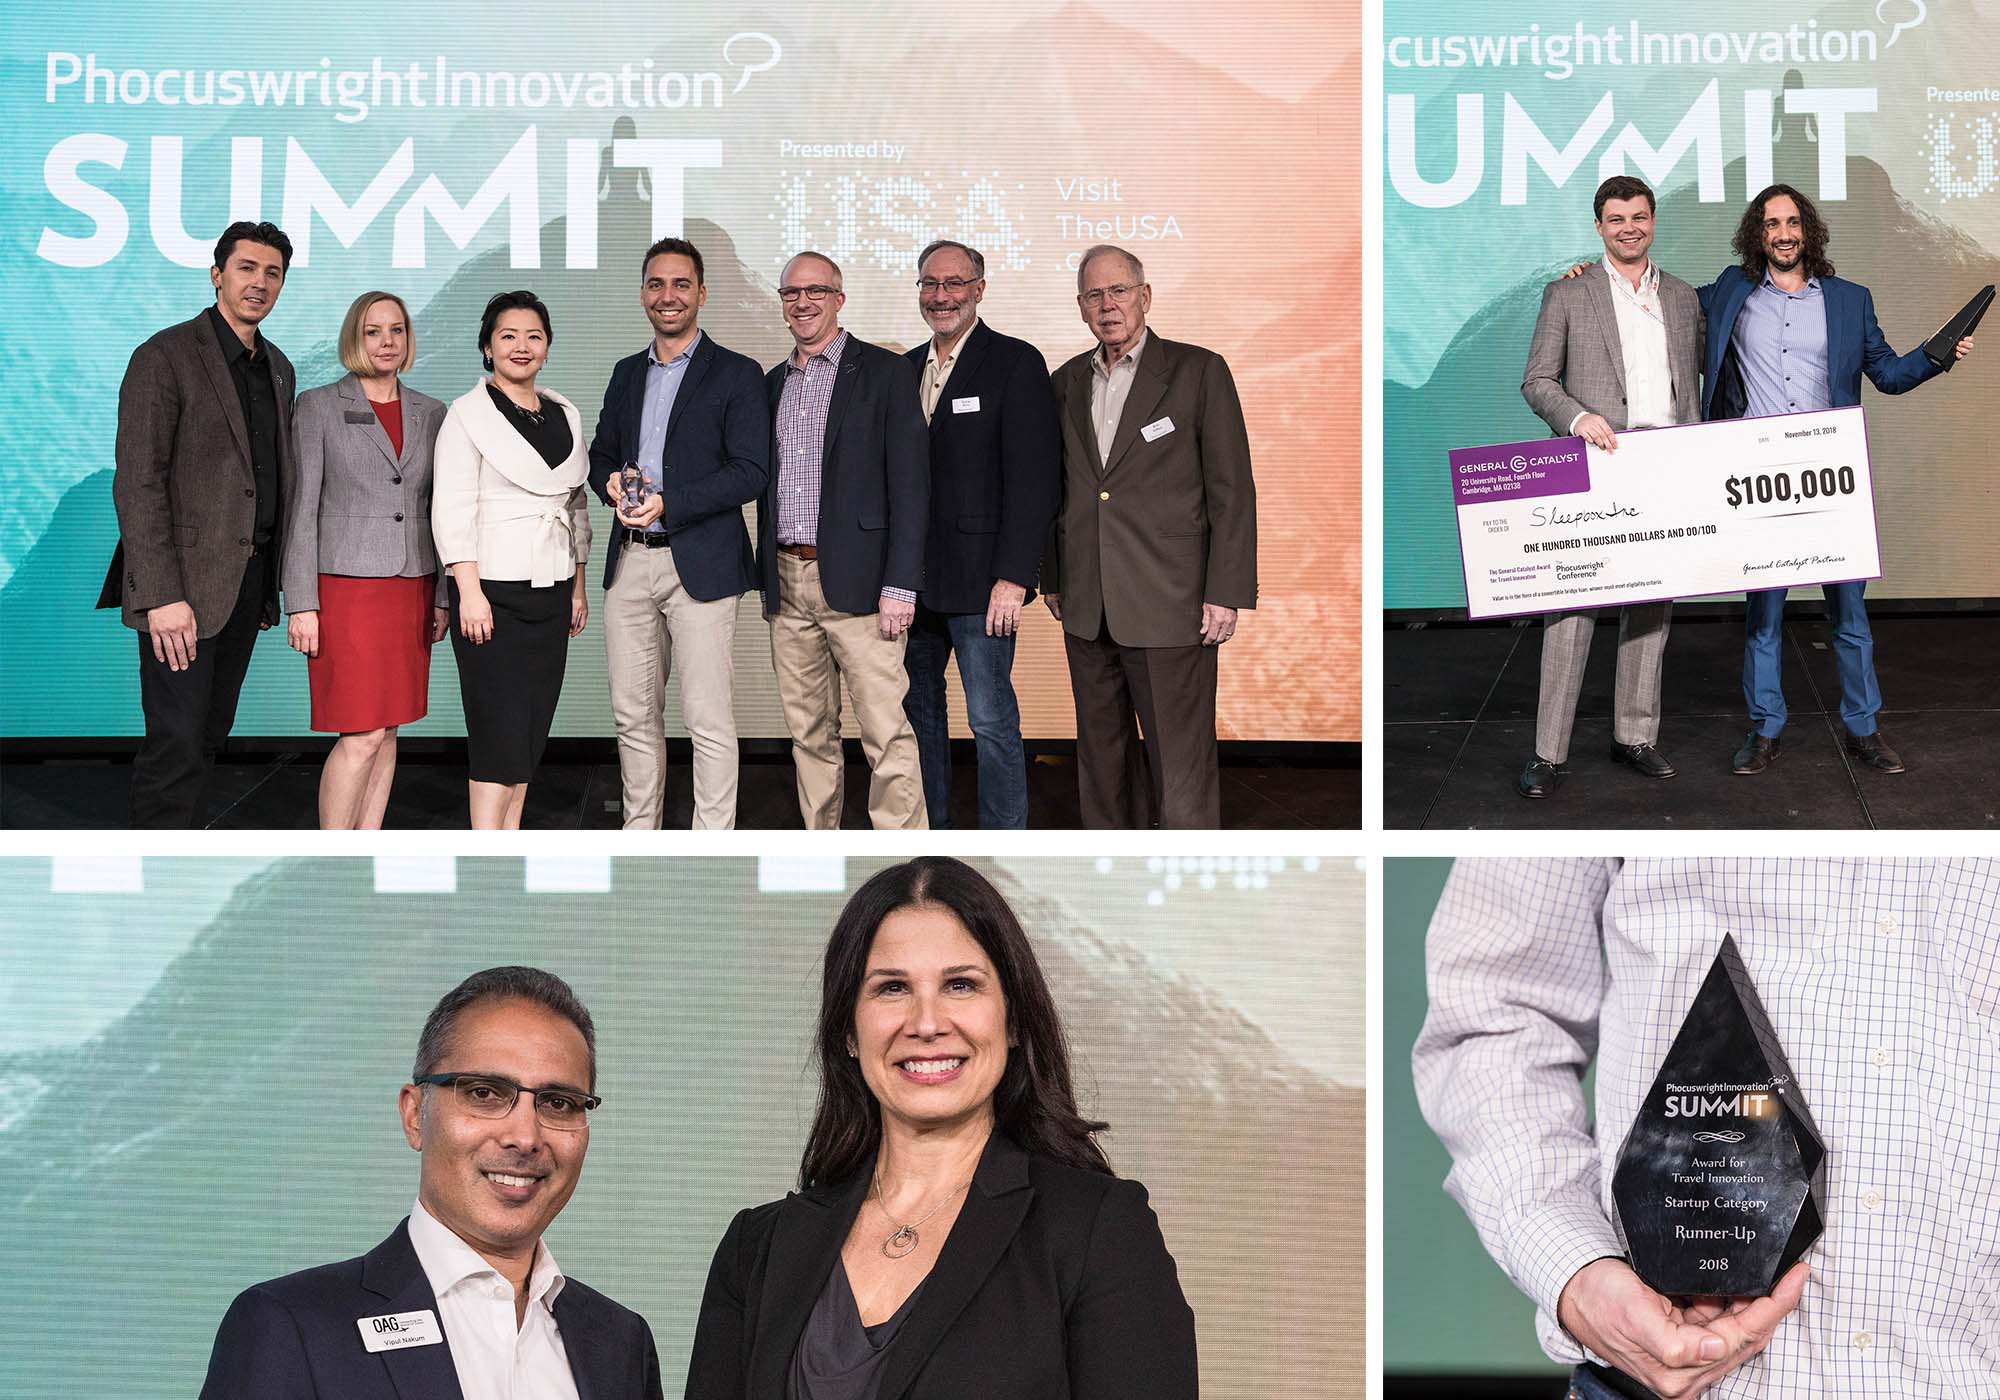 2015 Phocuswright Conference Innovation Winners